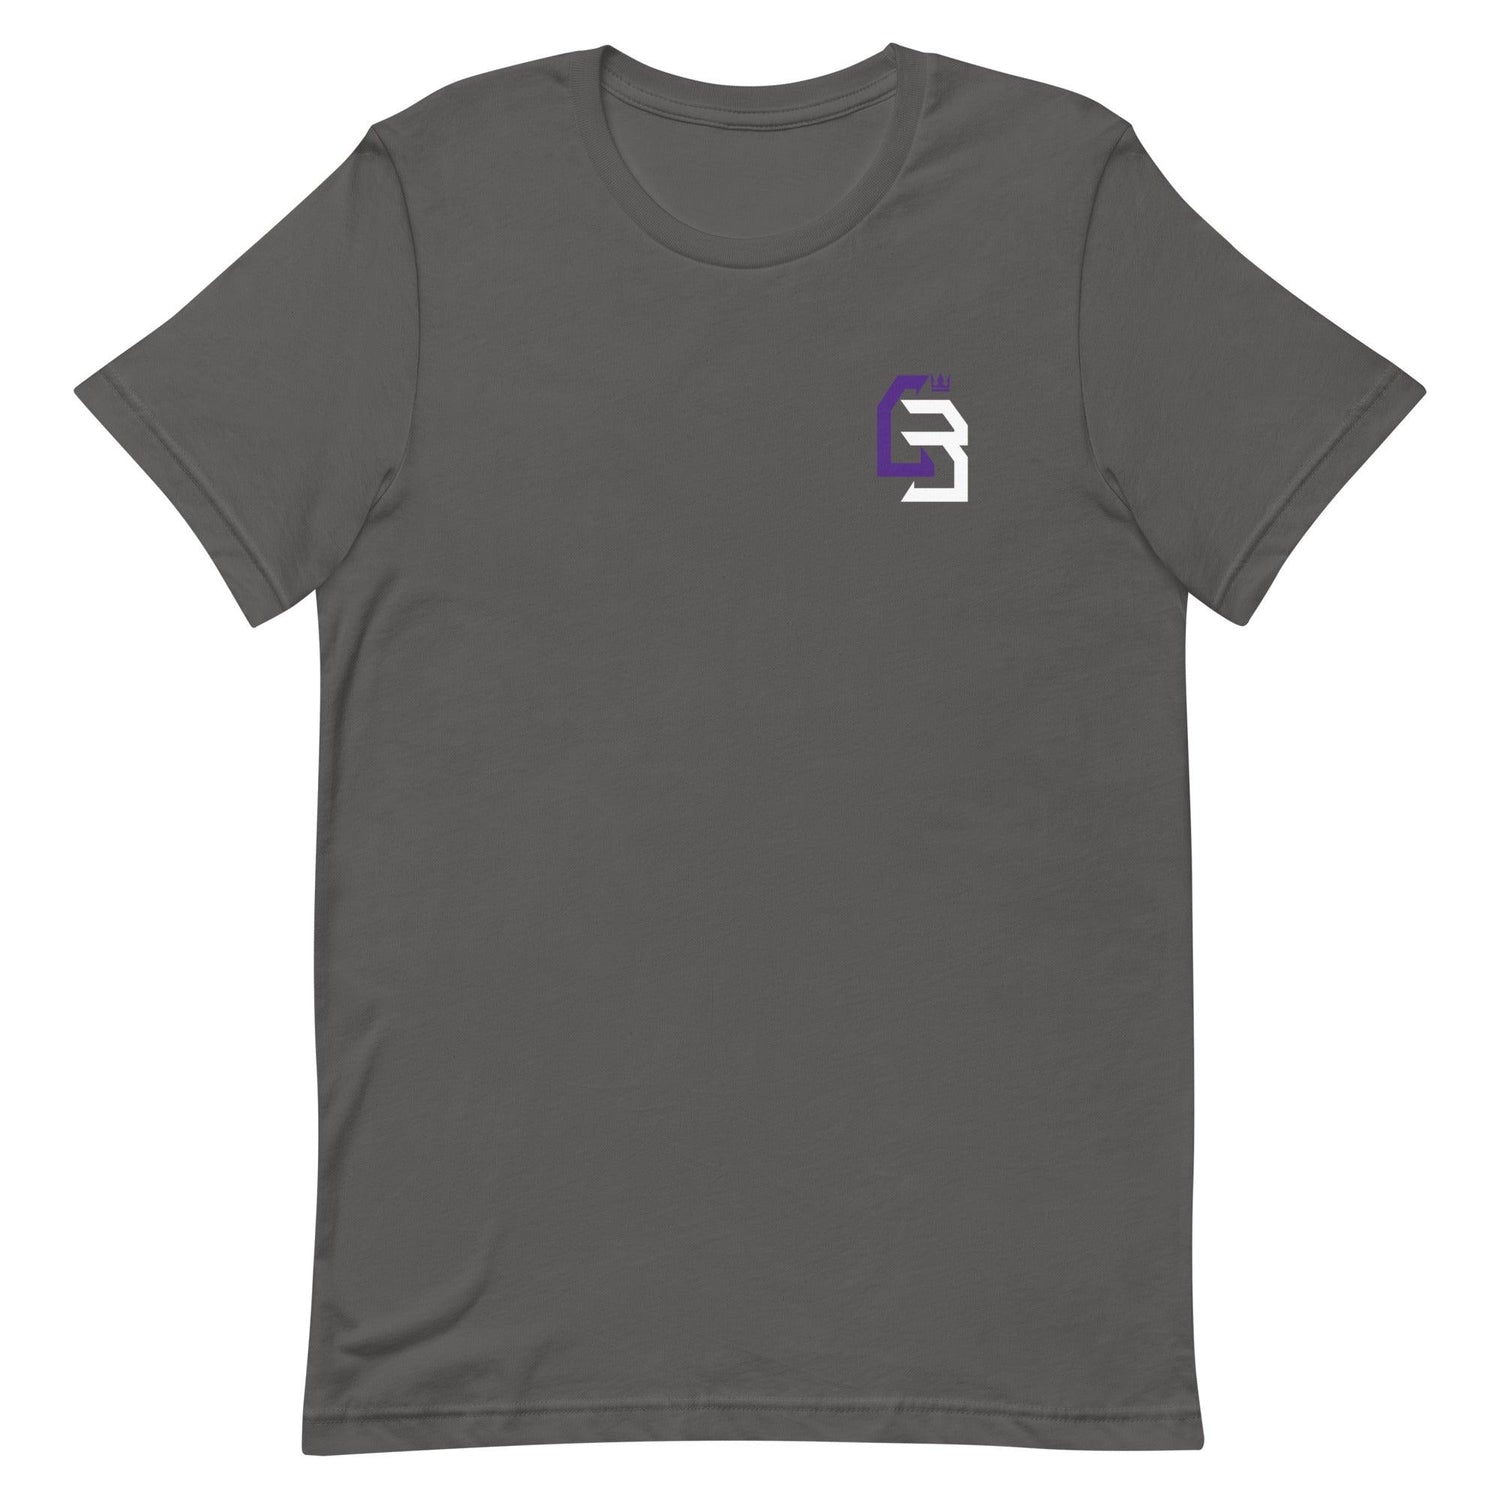 Camden Beebe "Essential" t-shirt - Fan Arch